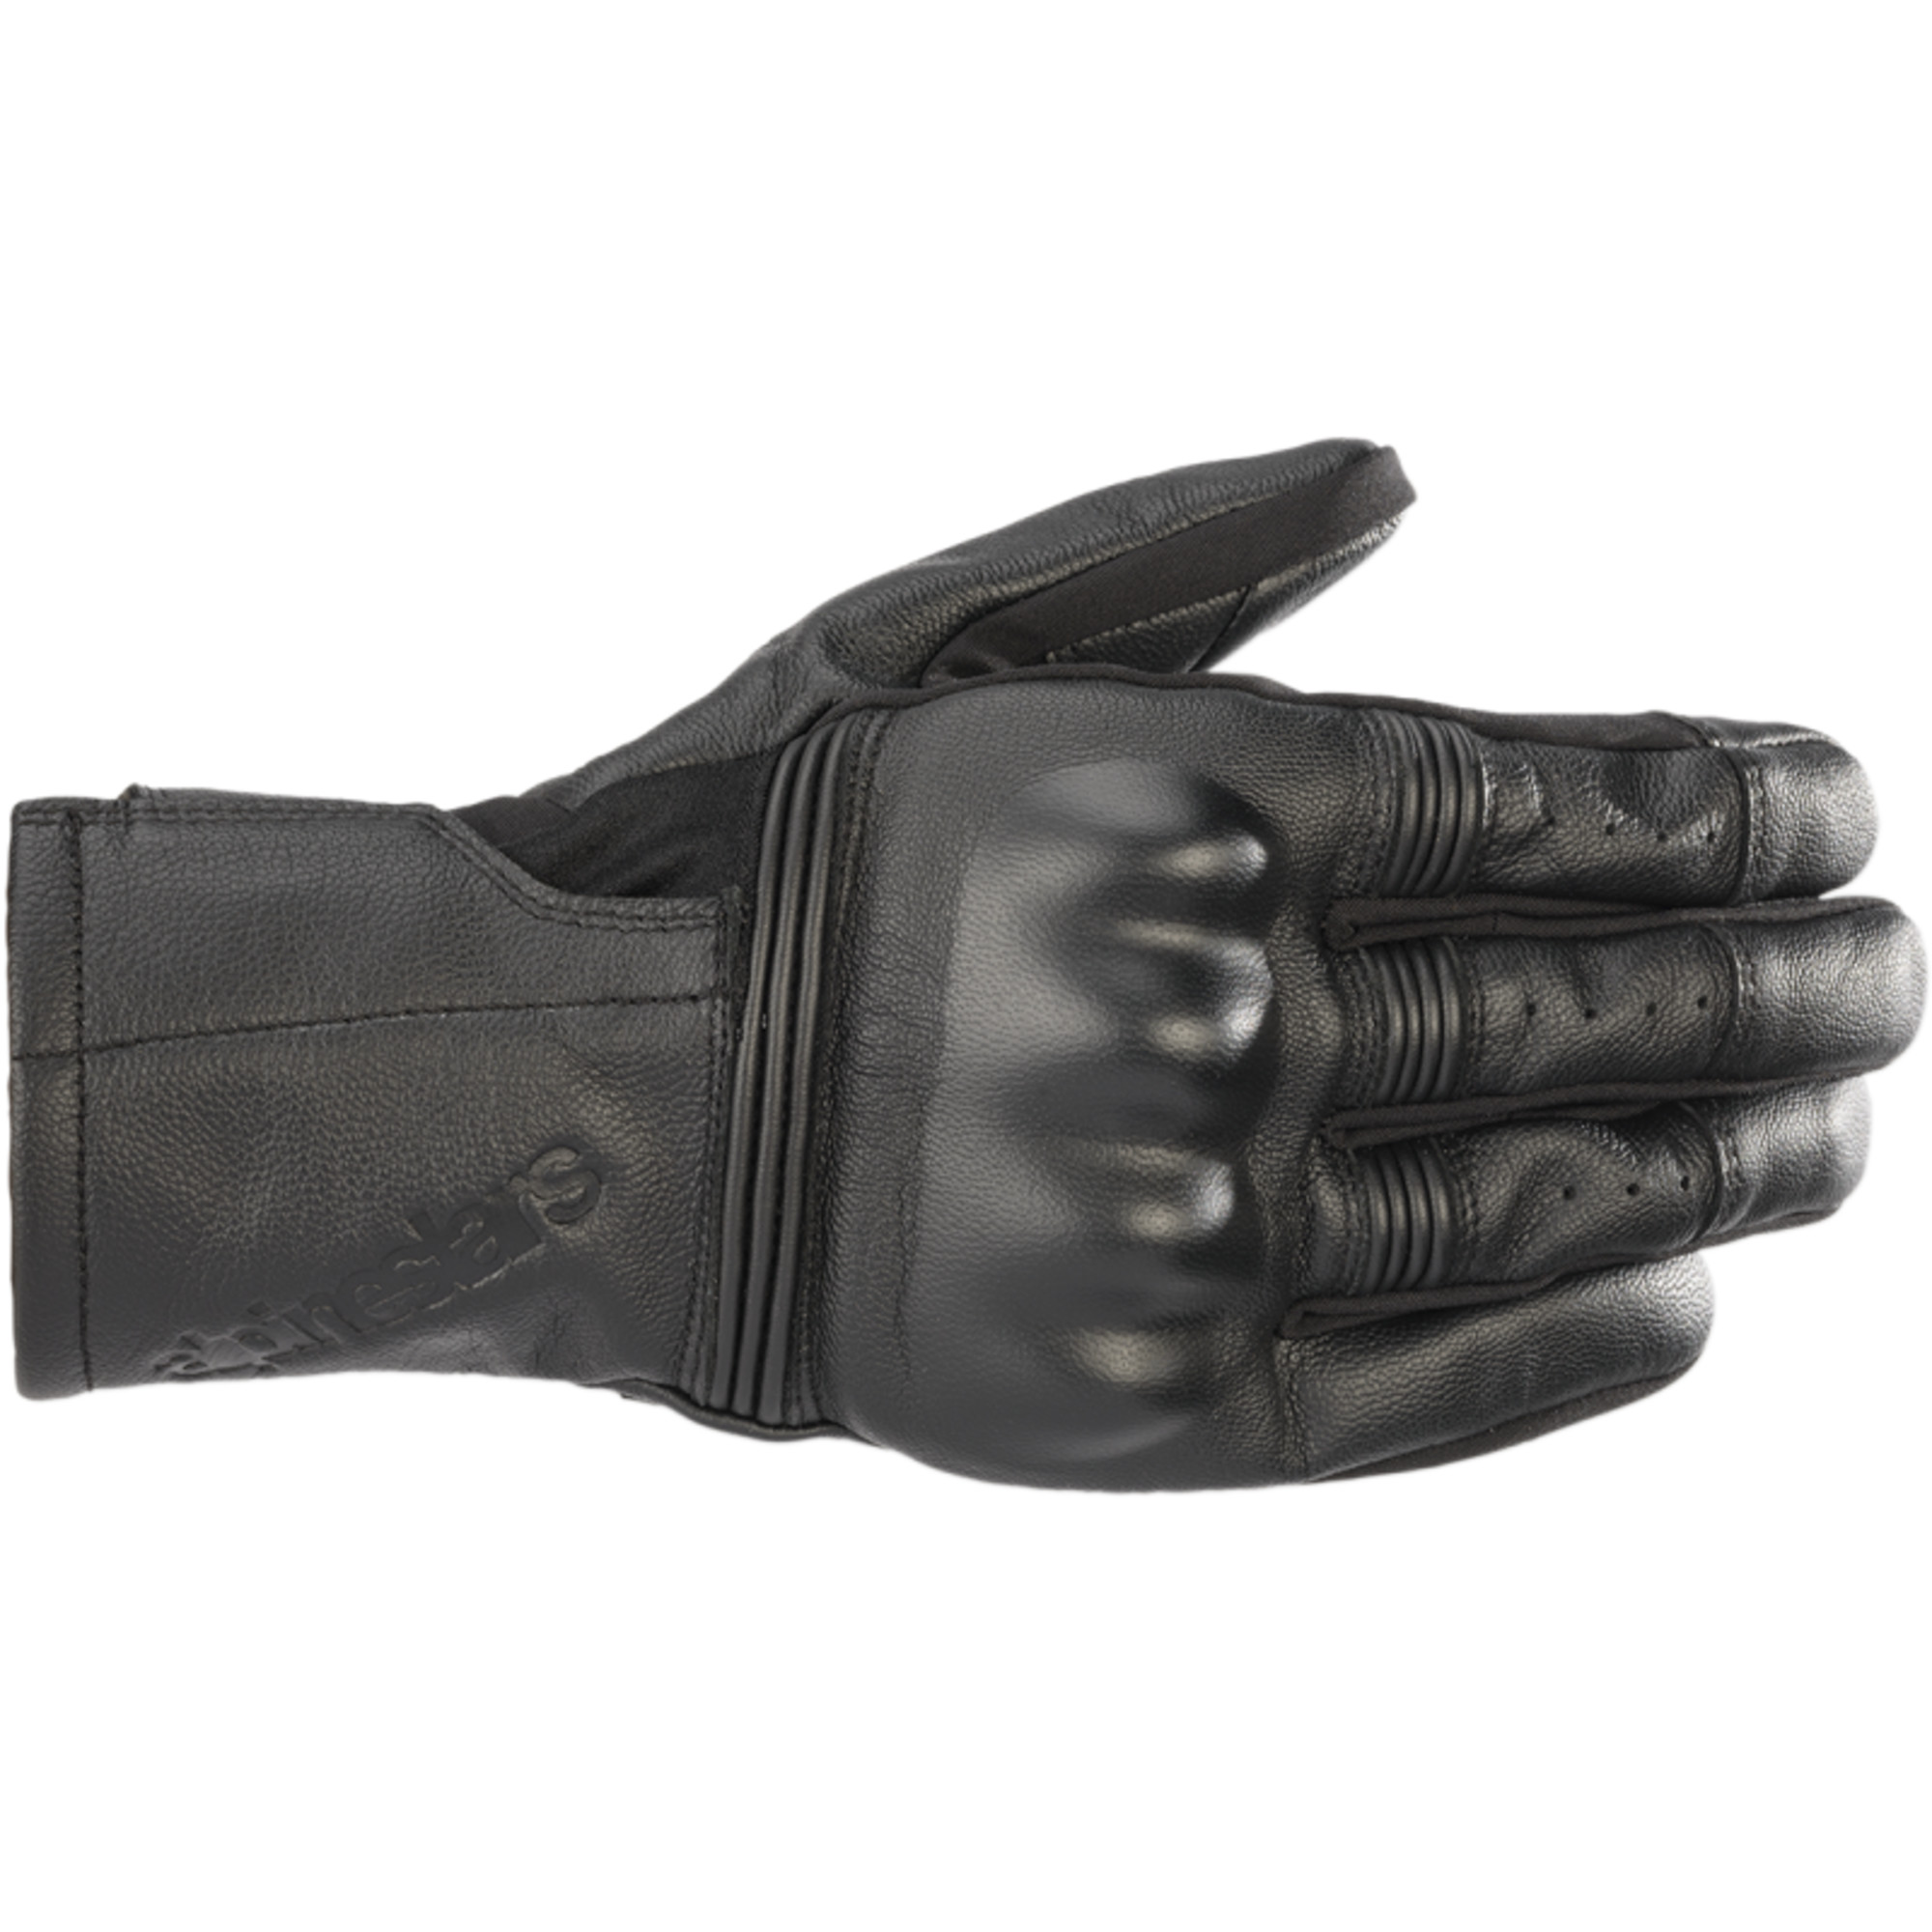 alpinestars leather gloves for mens gareth